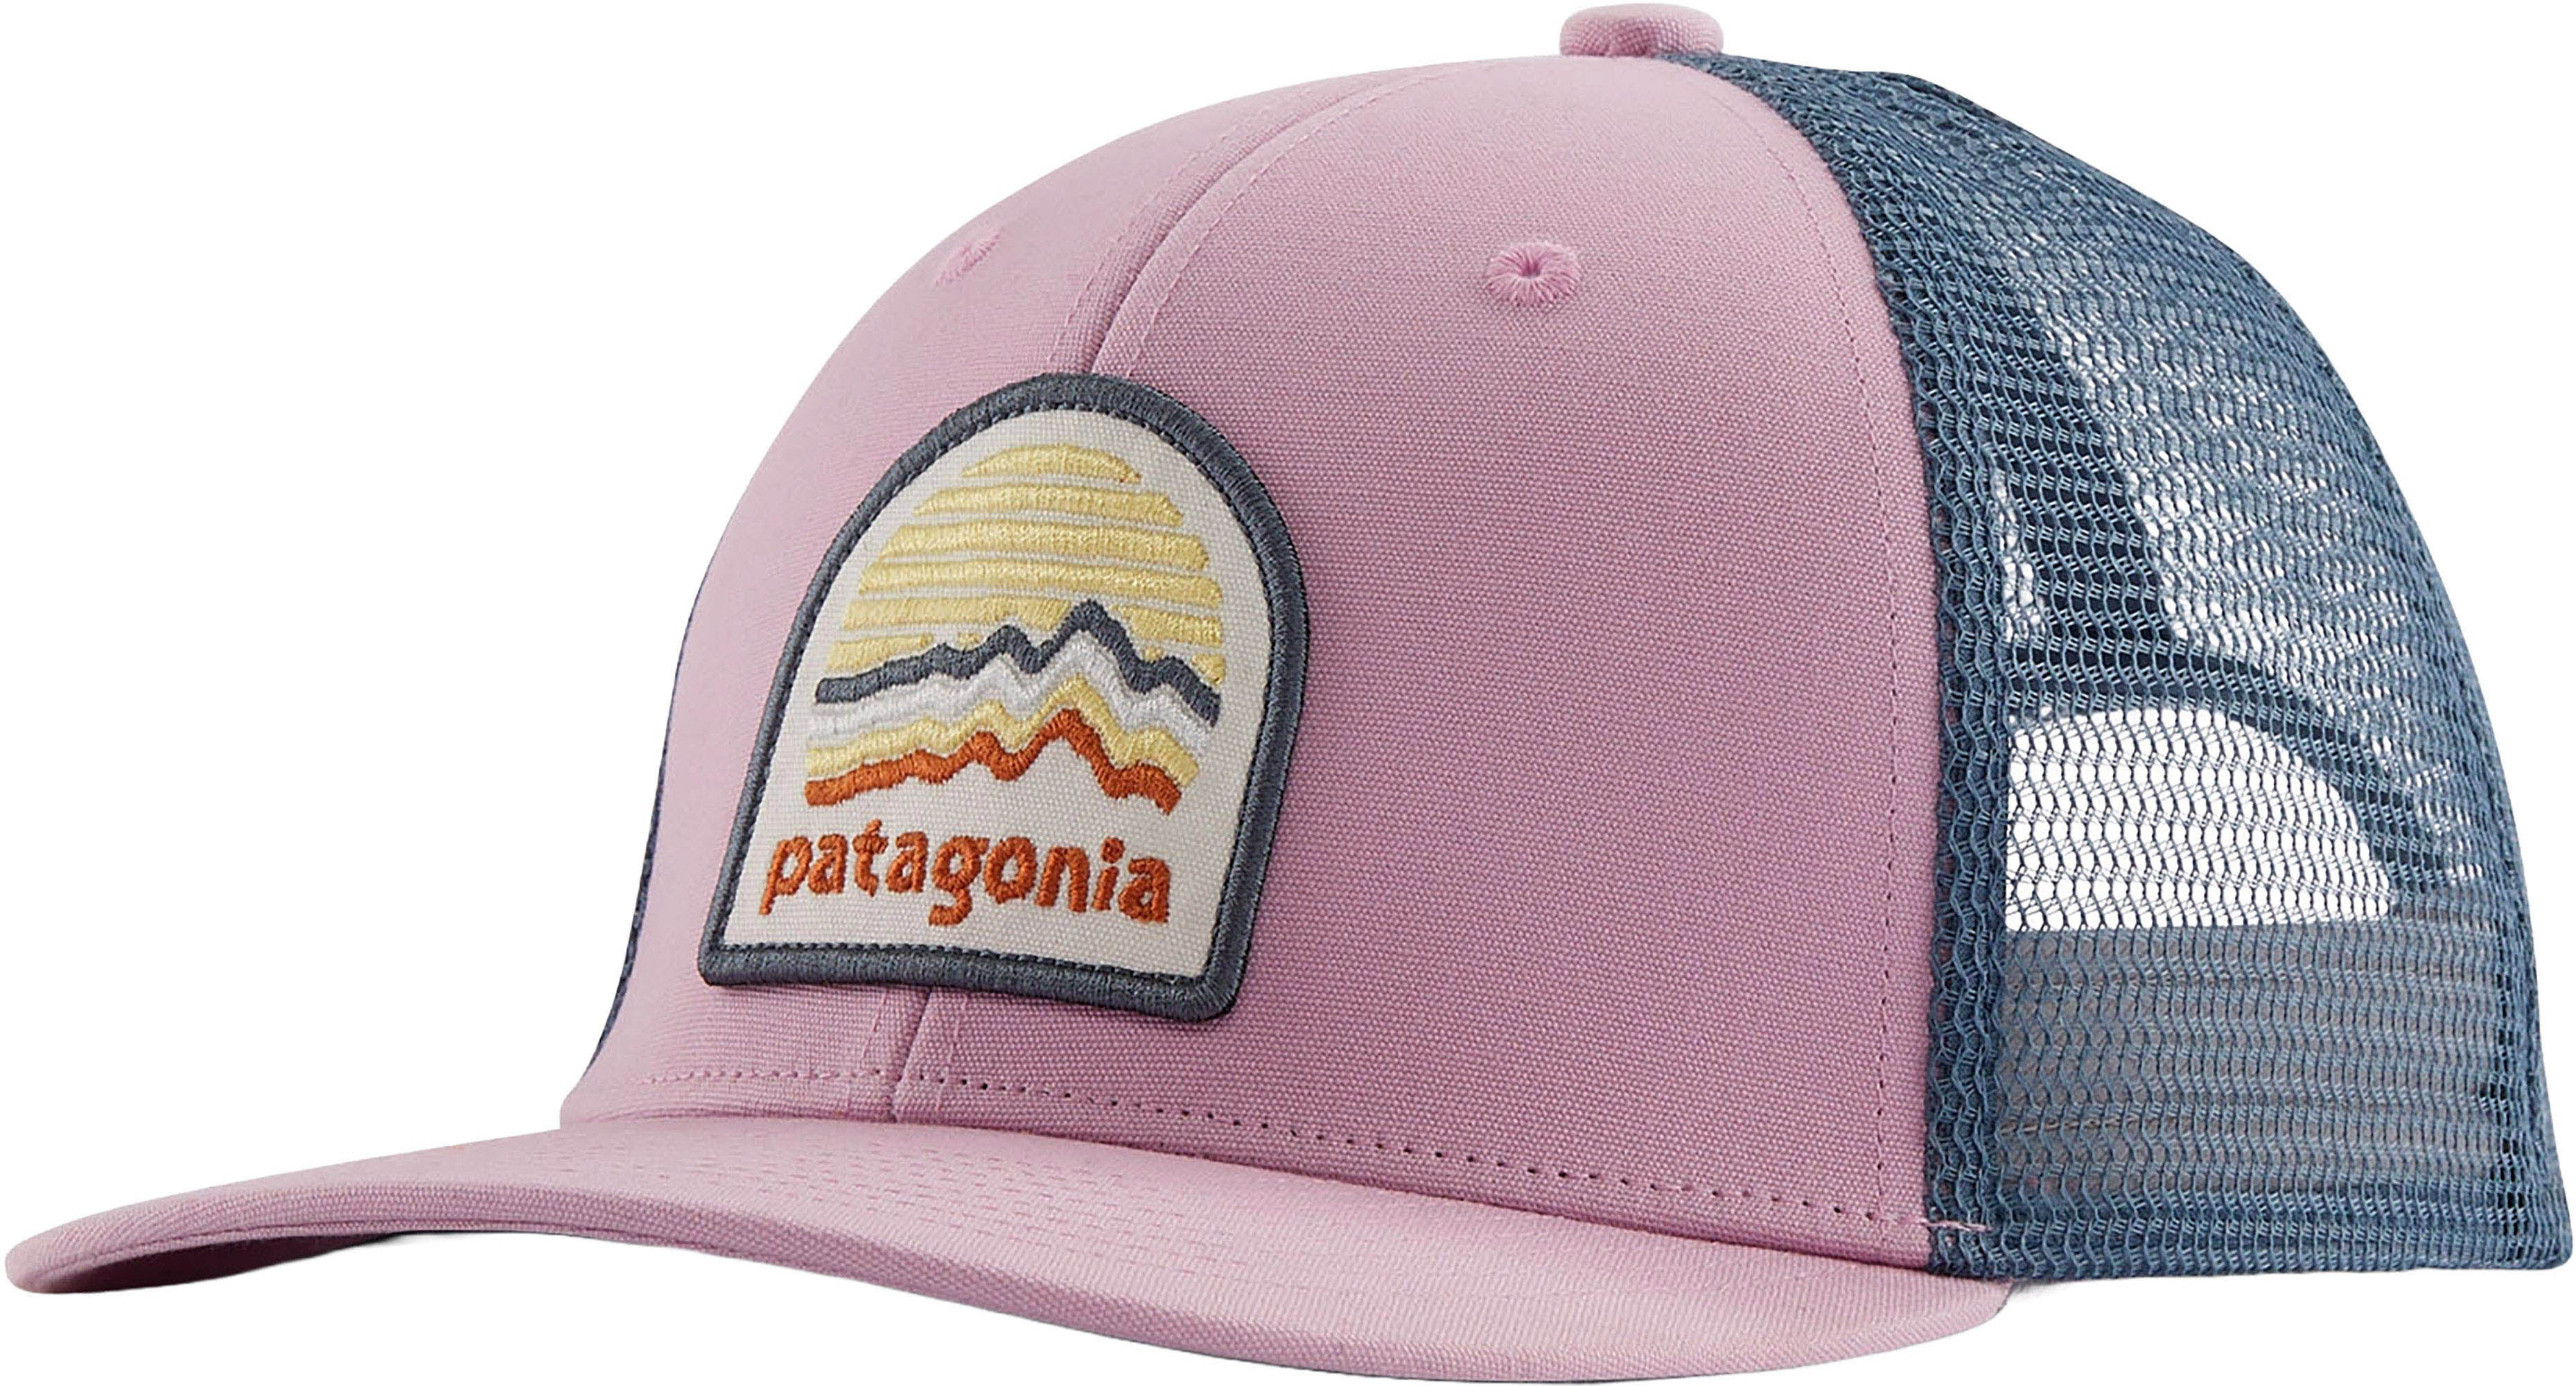 Patagonia Trucker Hat - Kids